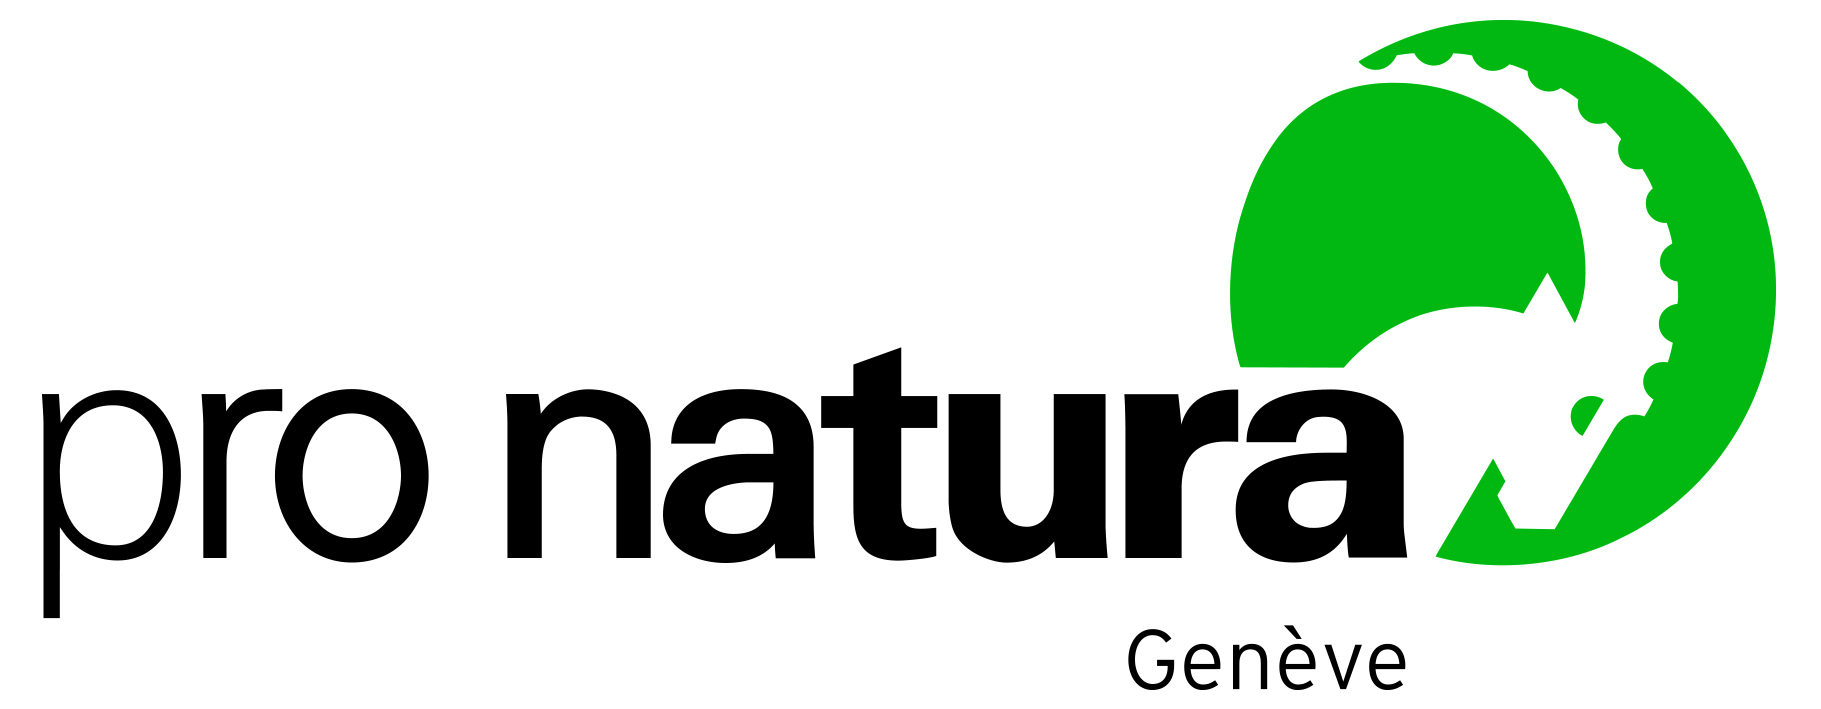 logo_pronatura_genève